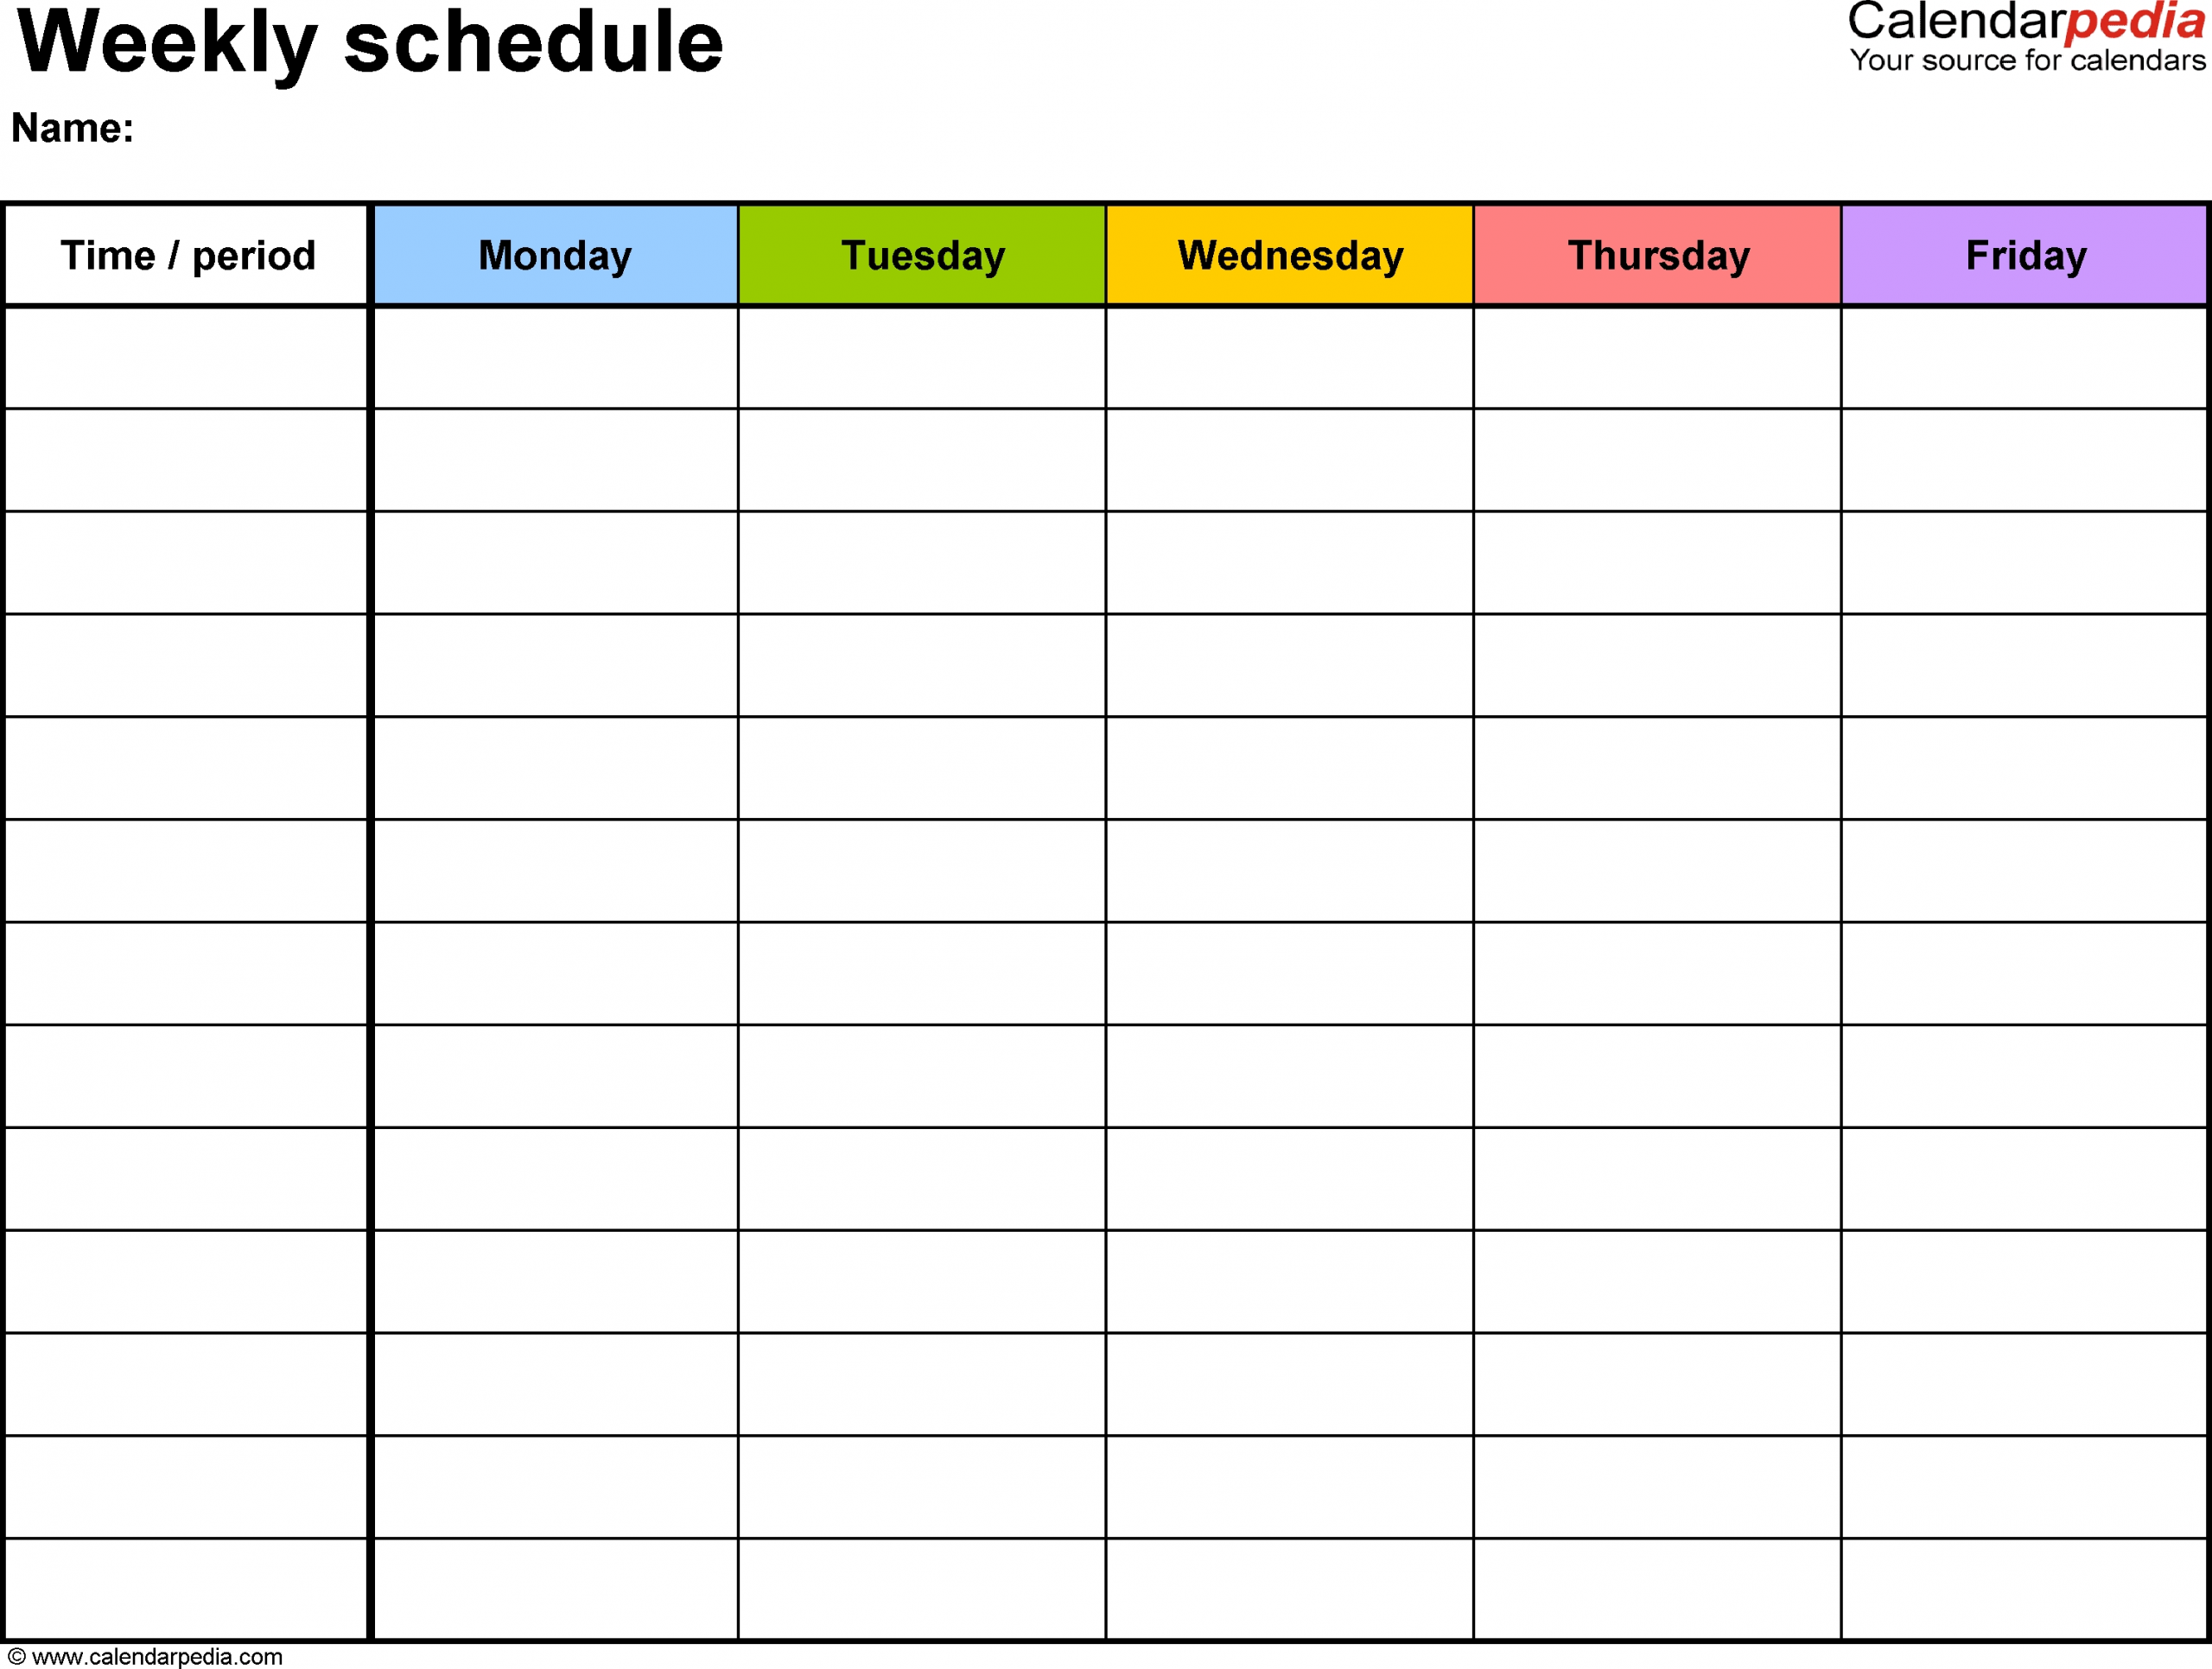 Free Weekly Schedule Templates For Excel - 18 Templates inside Printable Week By Week Schedule